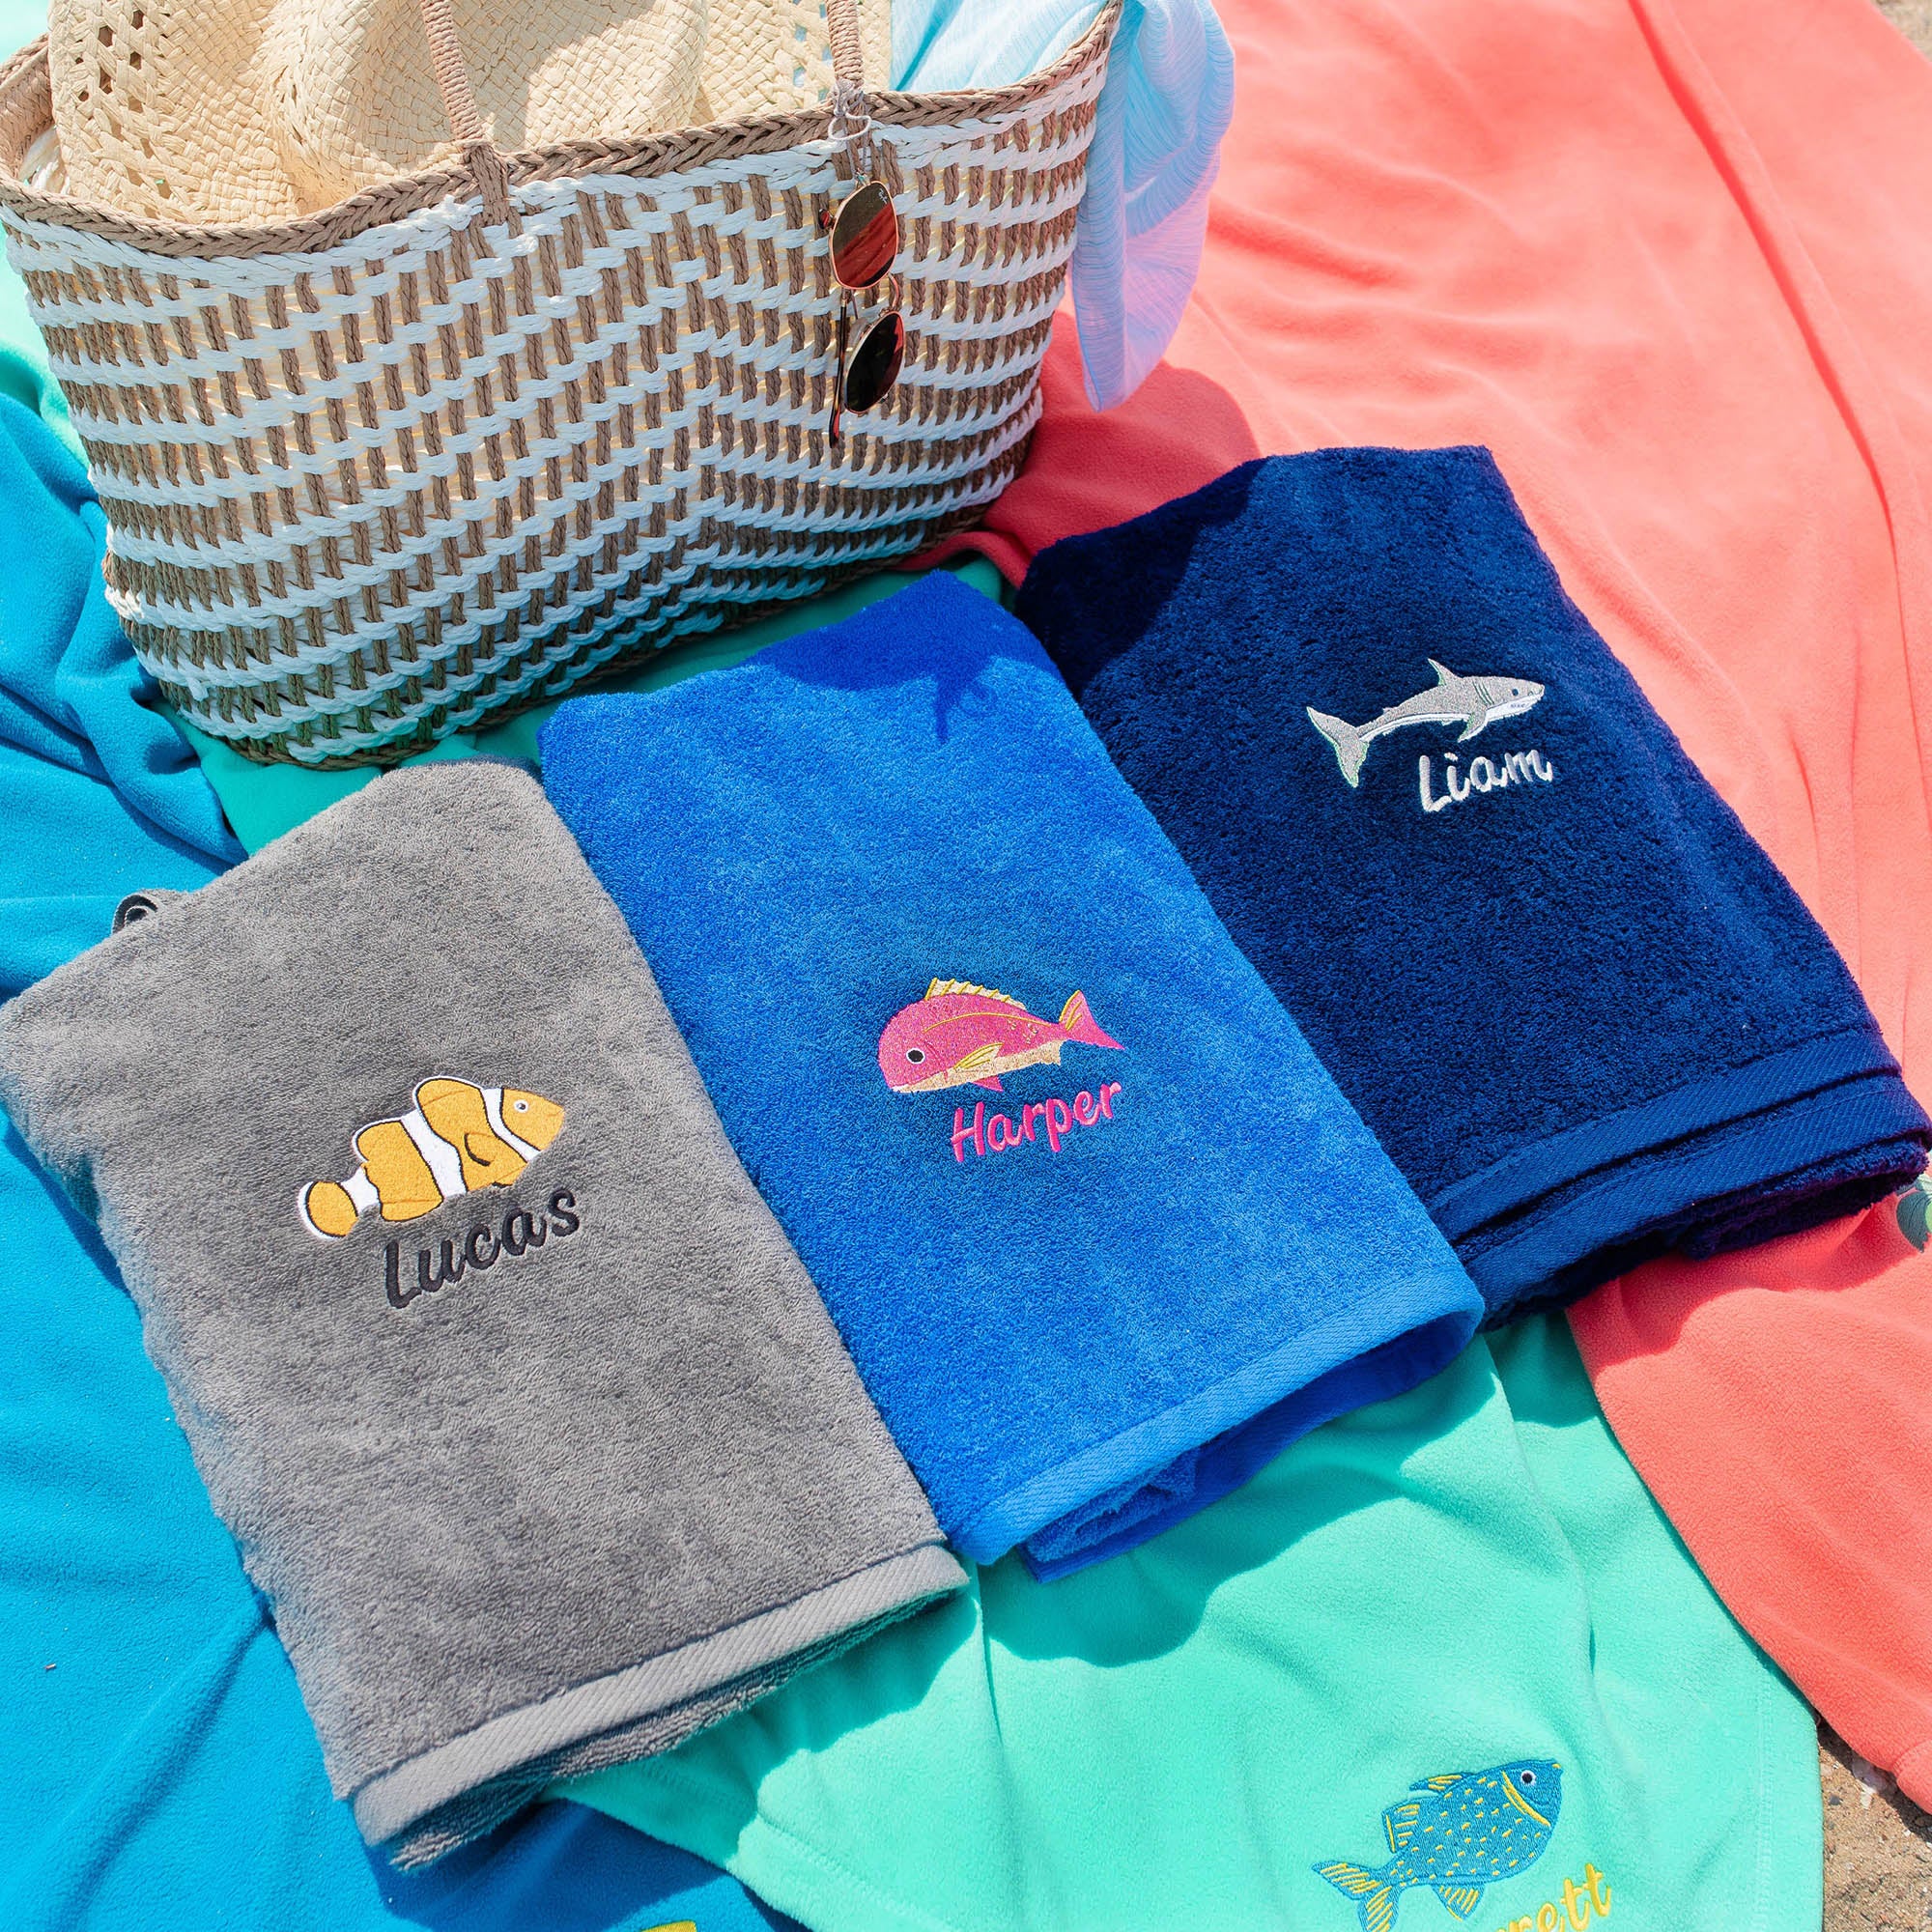 Beach Towel - Cotton